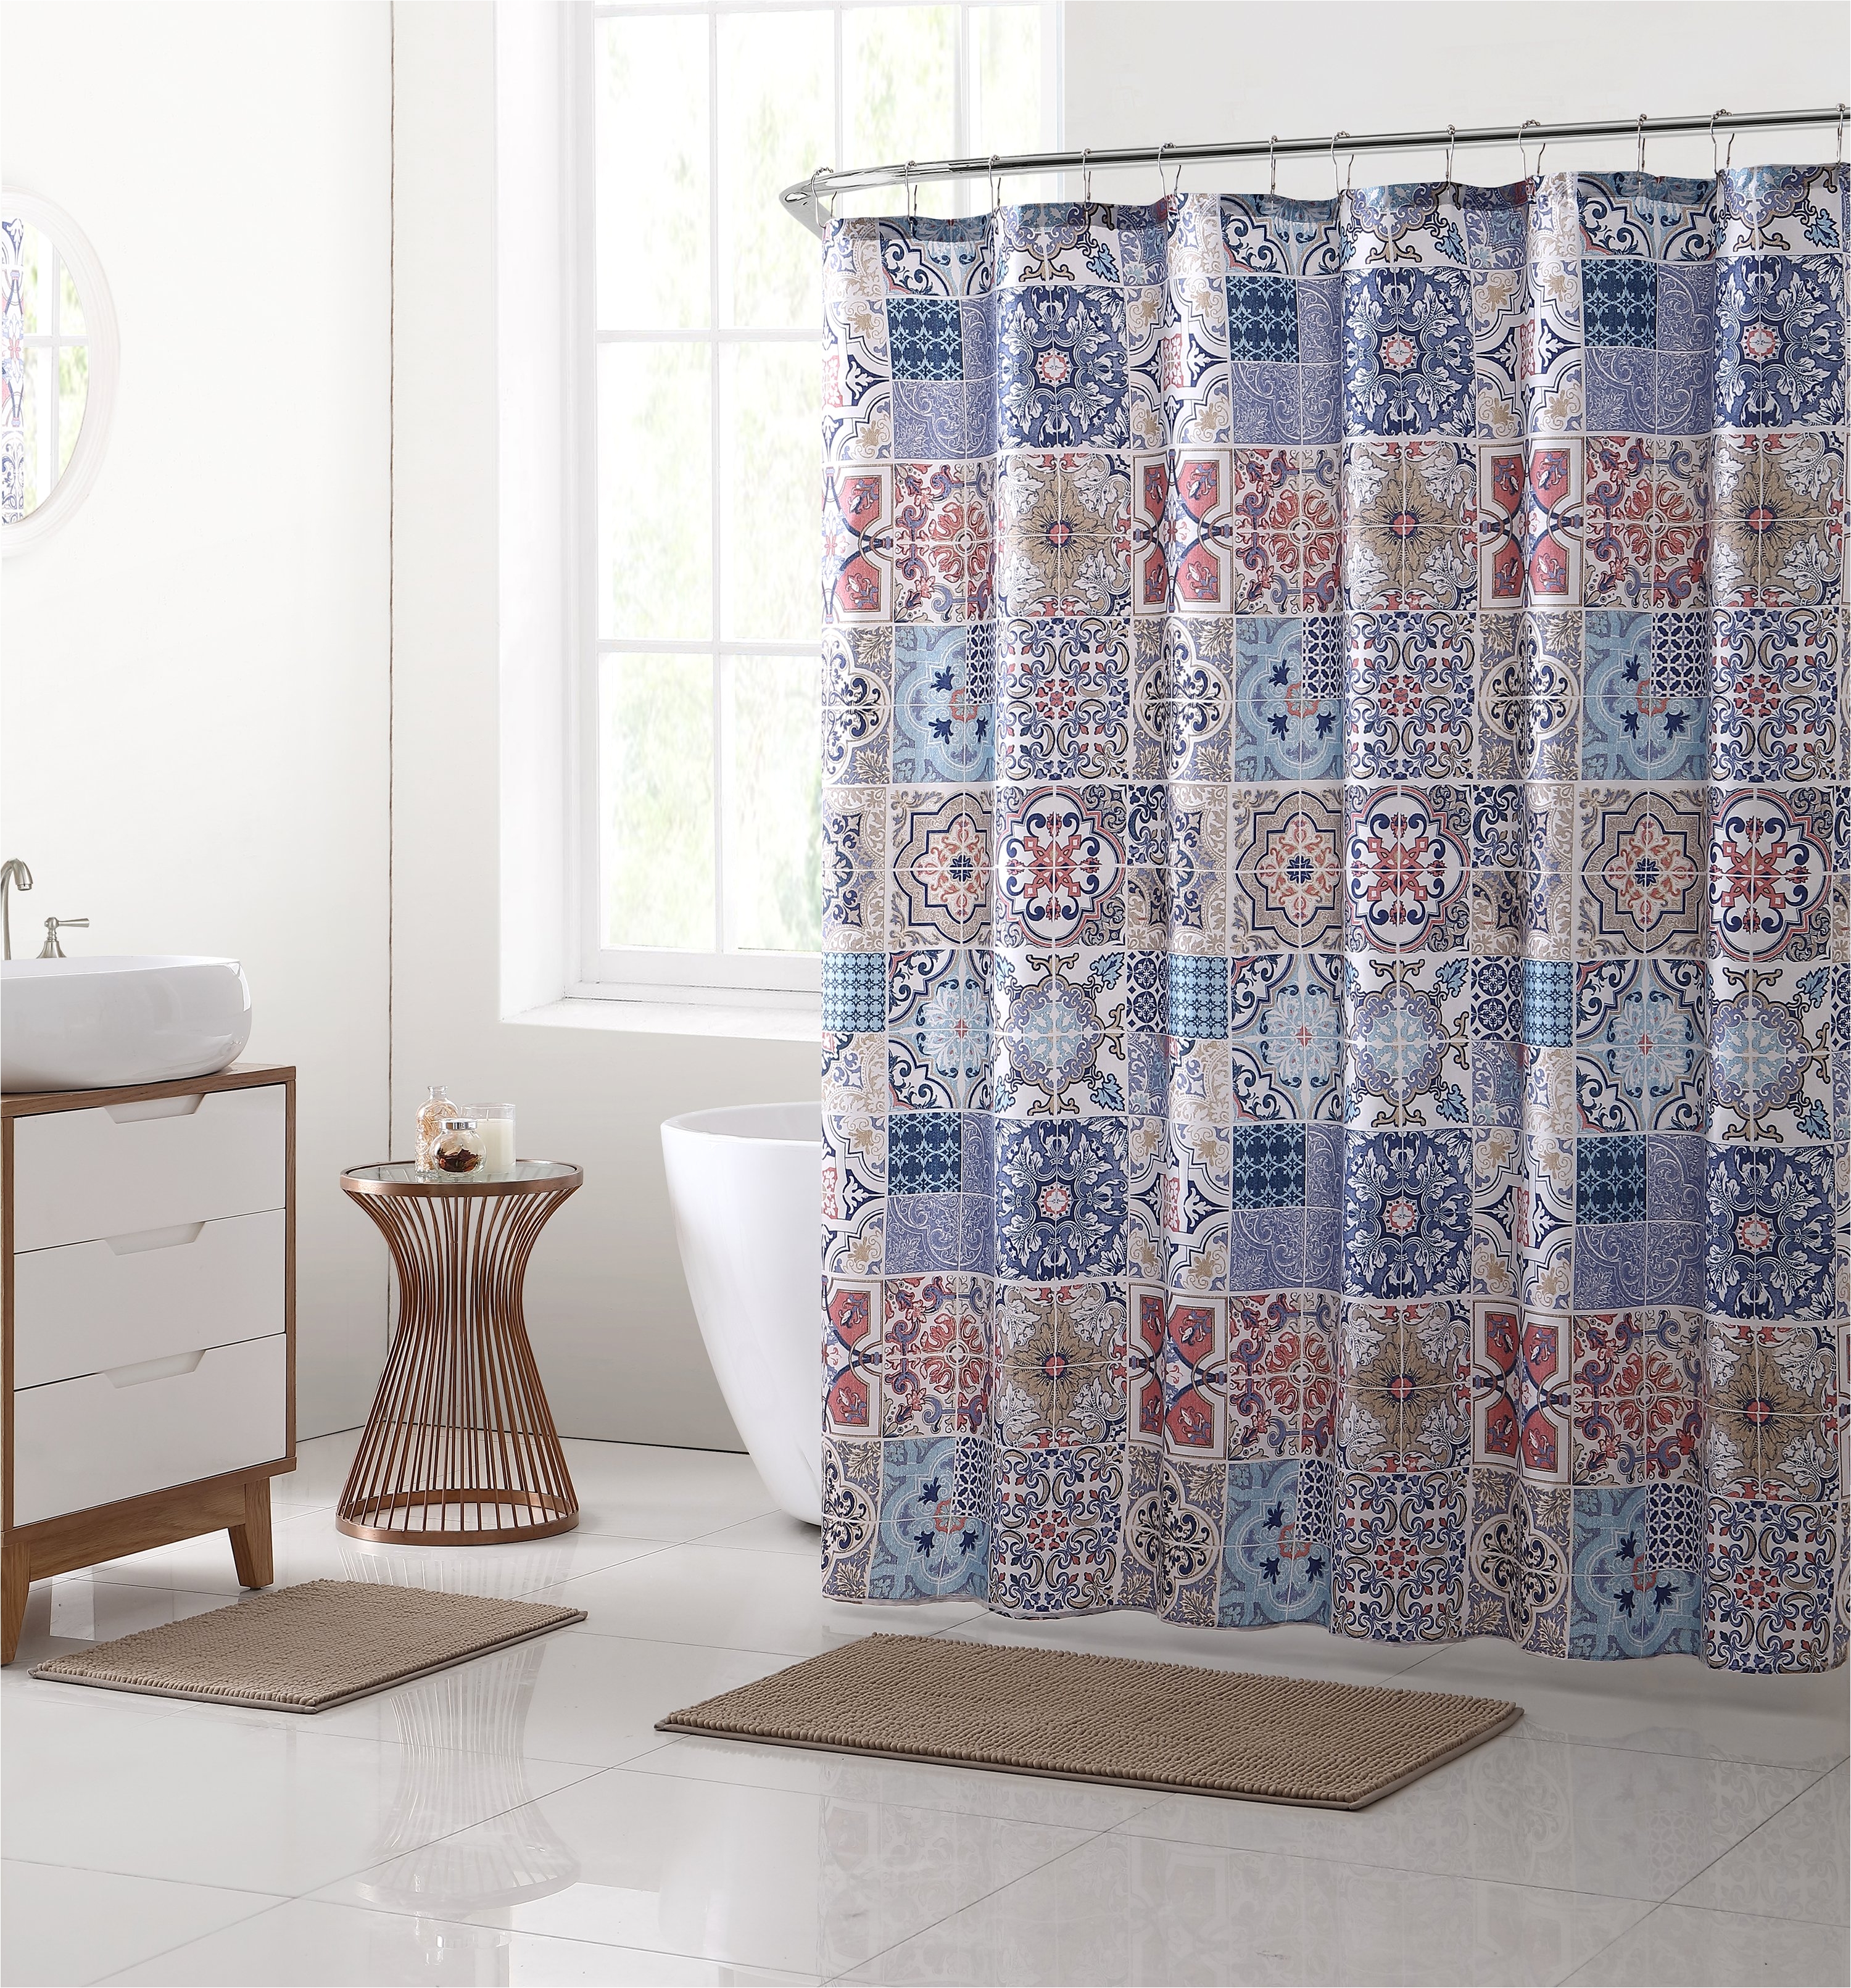 vcny home azulejos moroccan pattern bath set